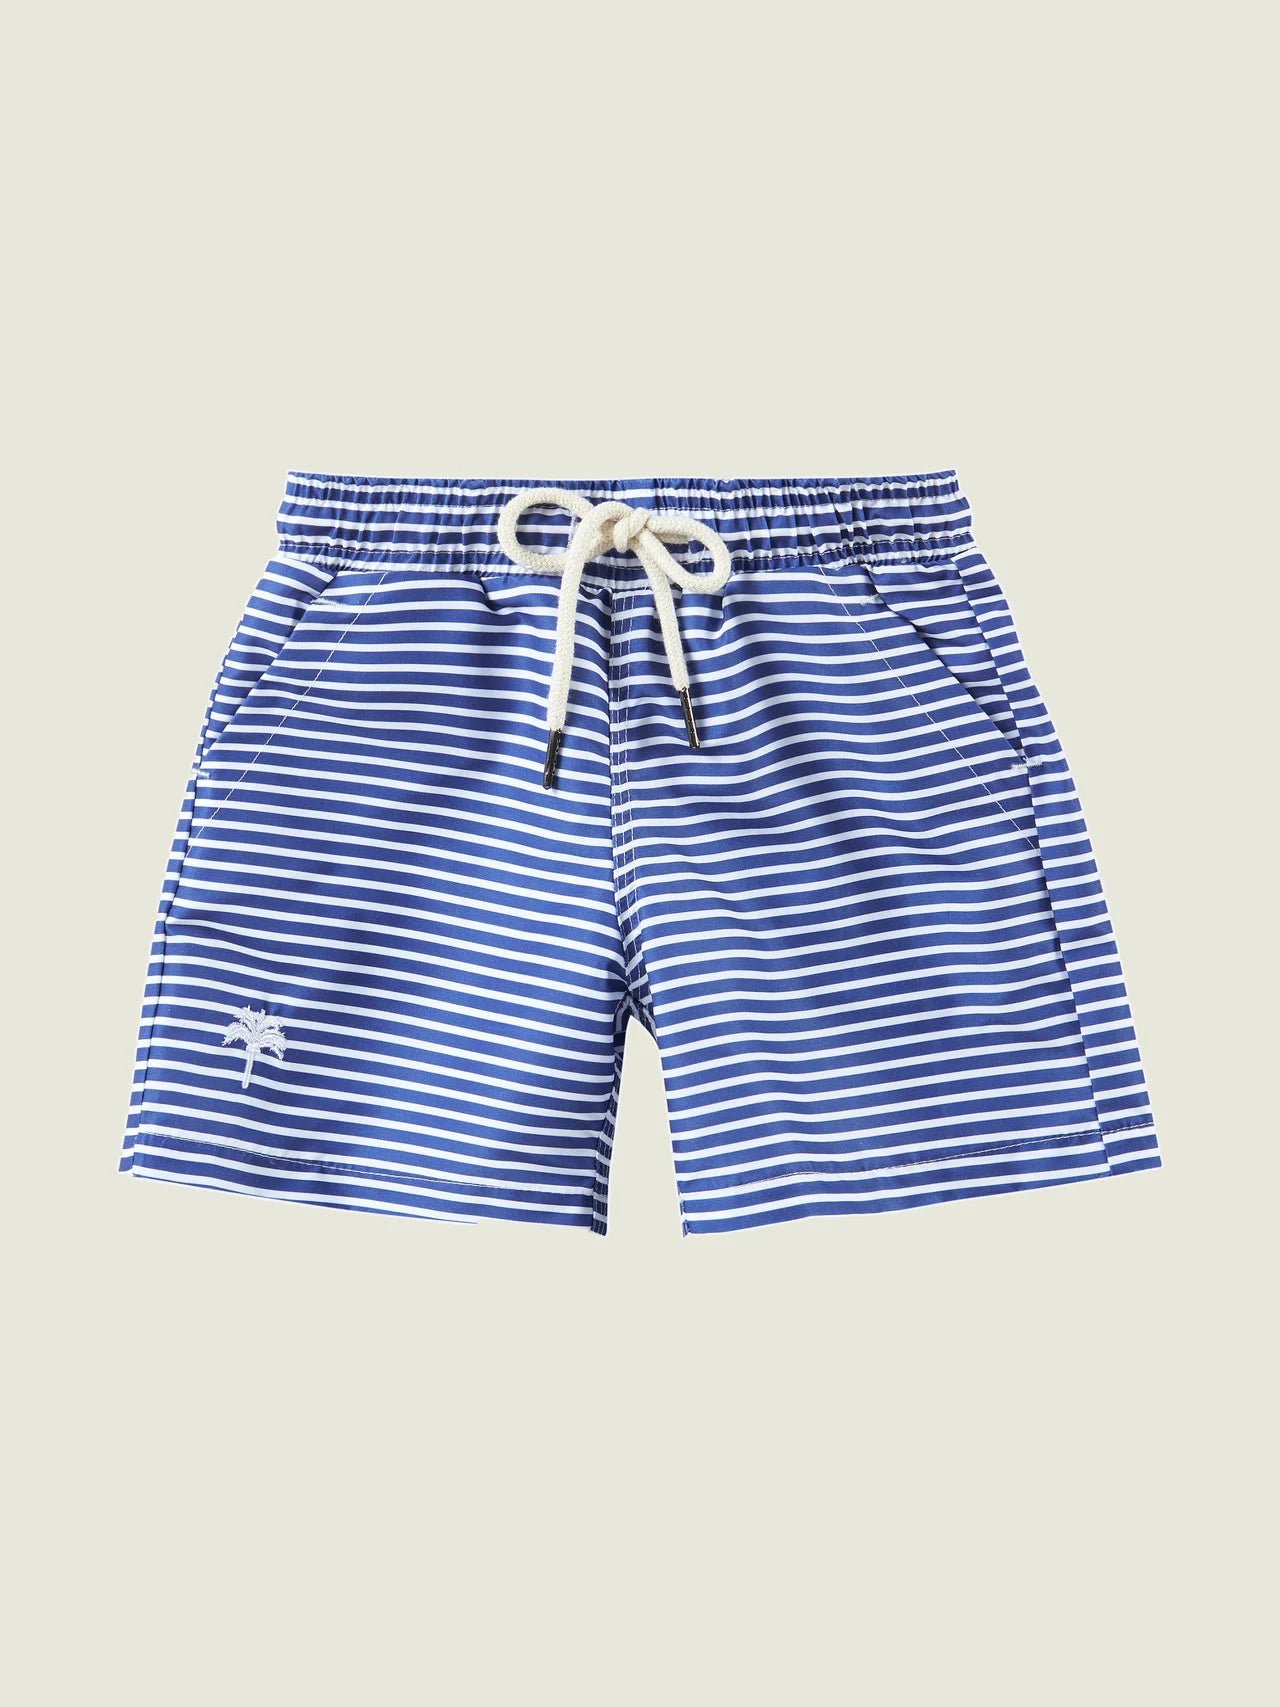 Kids Swim Shorts - Busy Blue